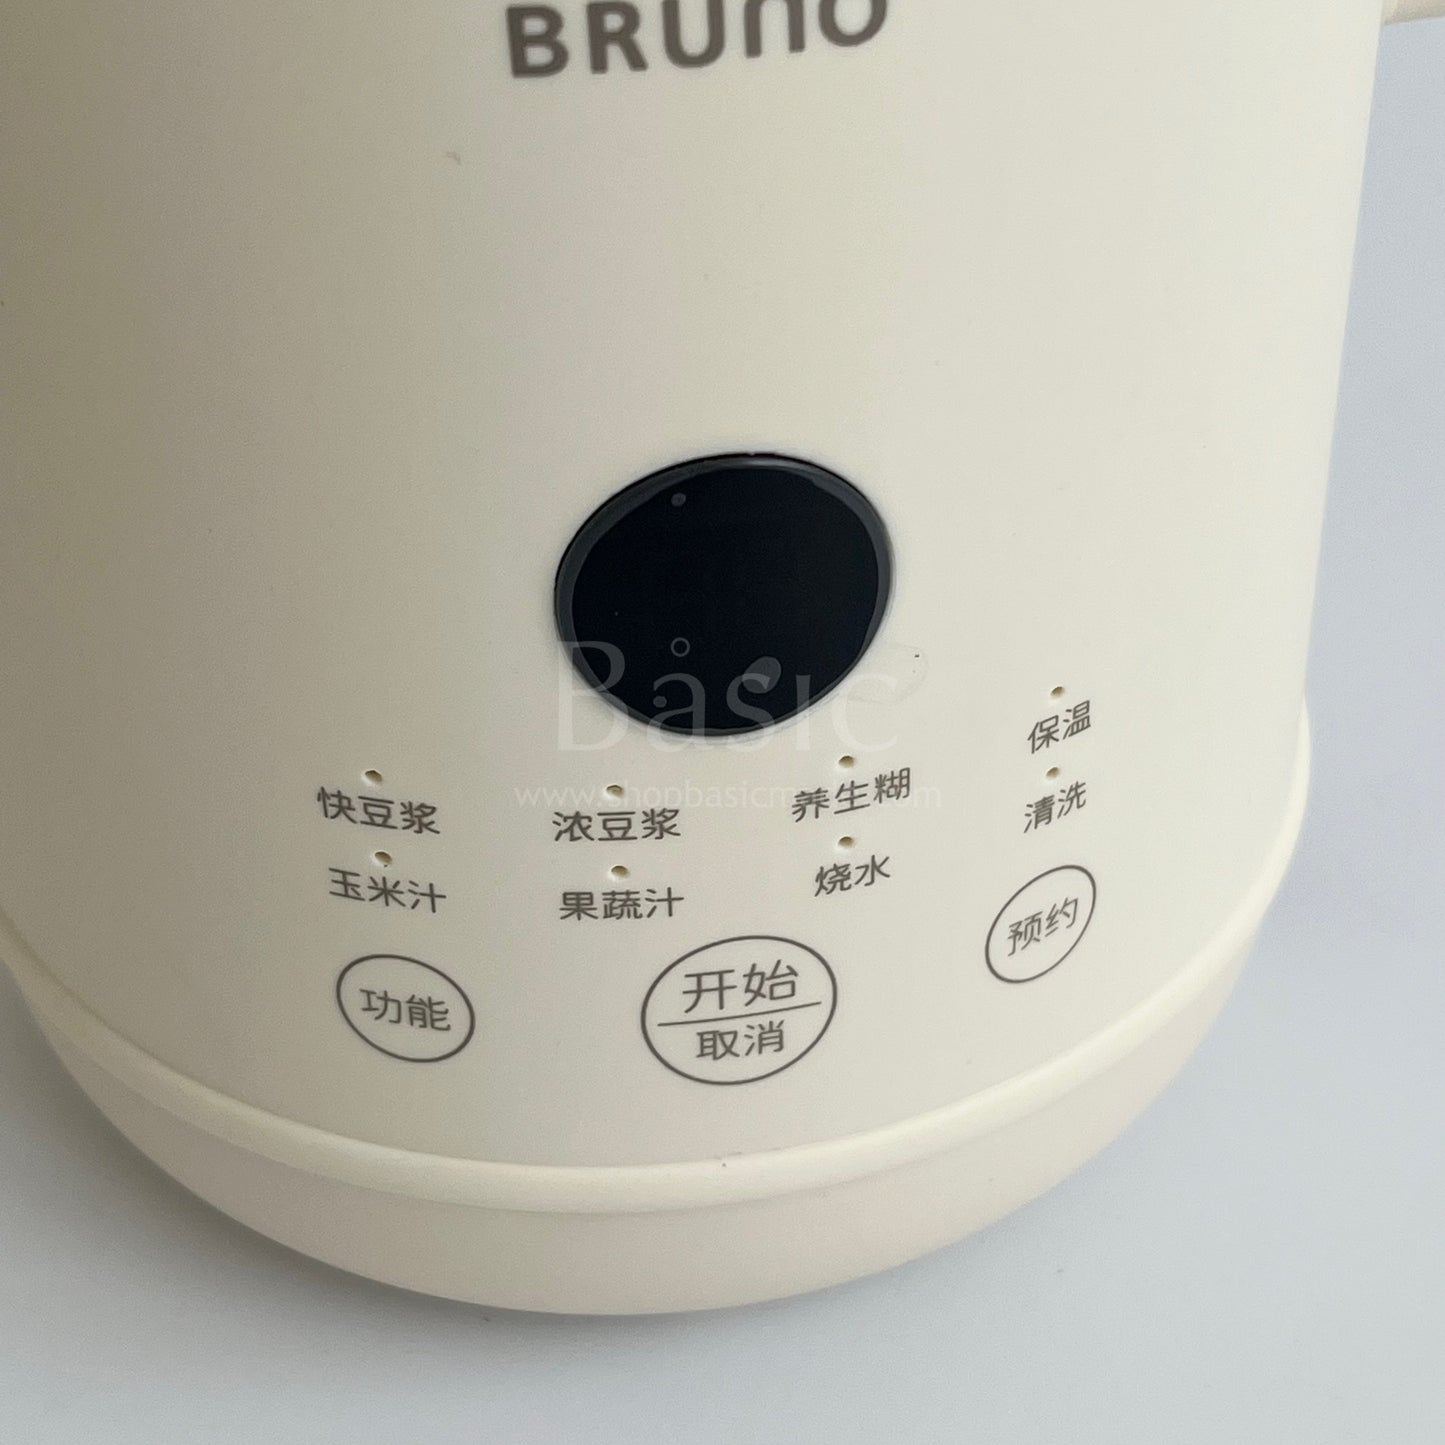 Bruno Soya Milk Maker